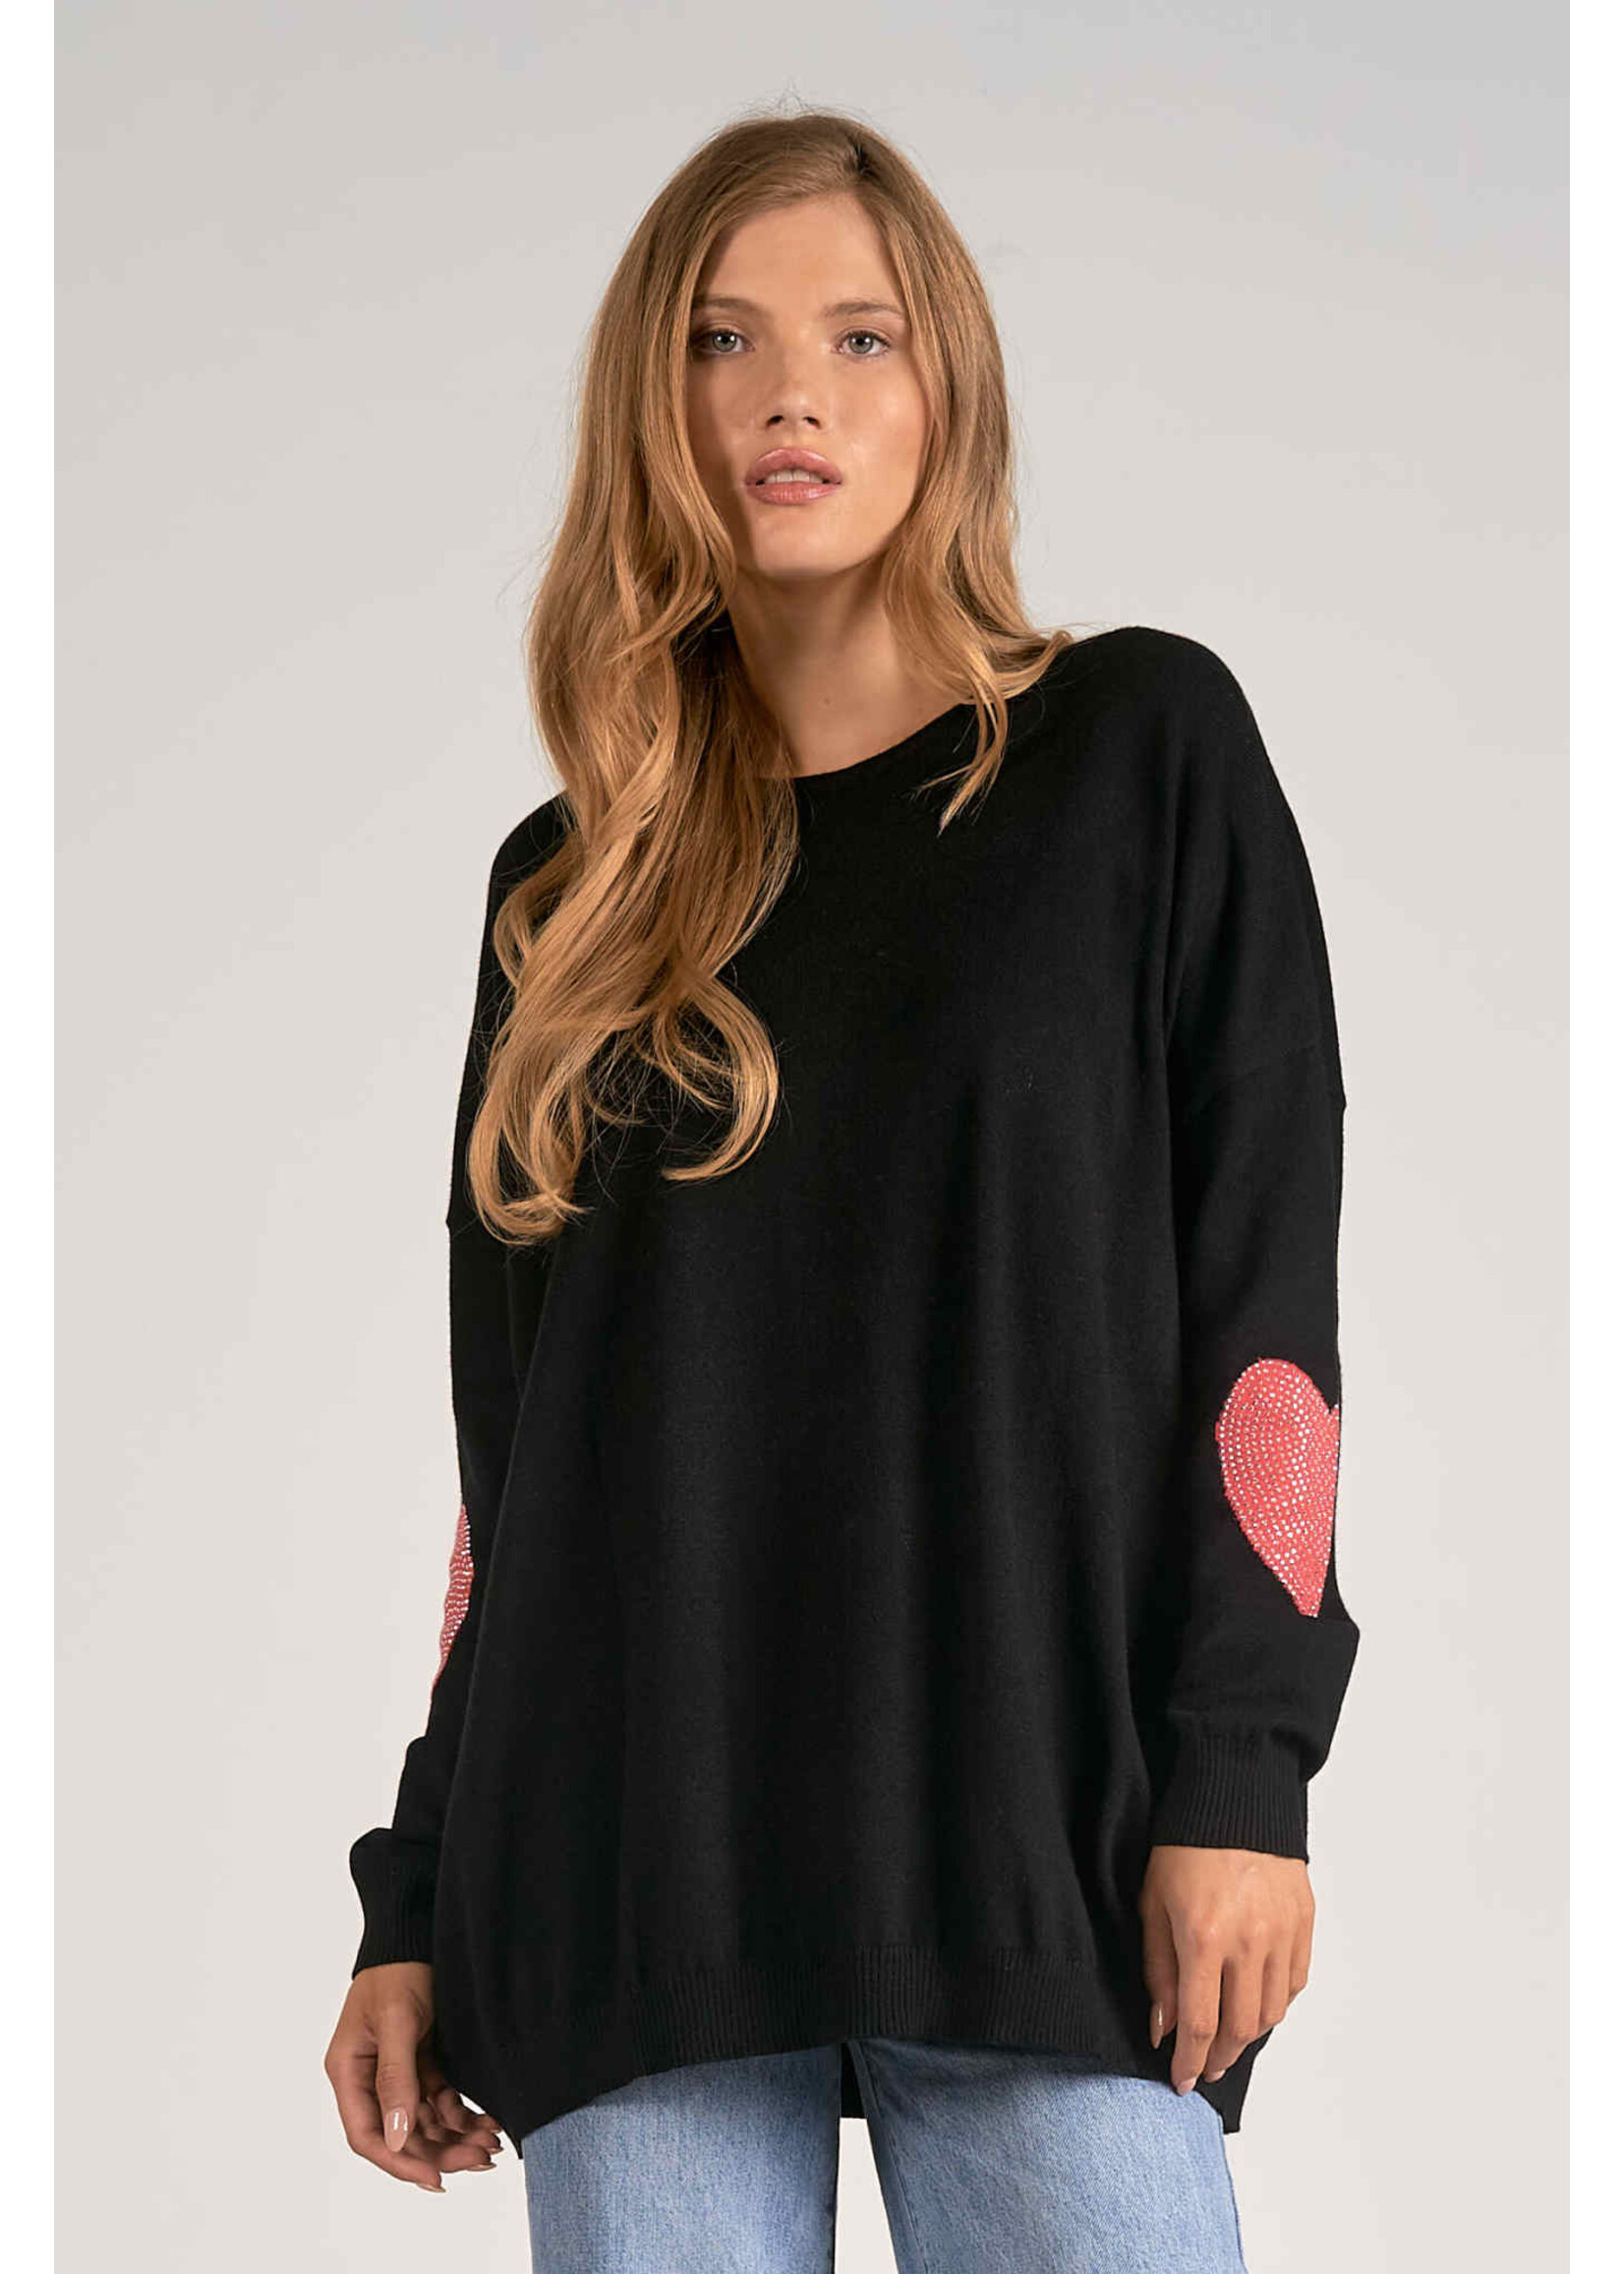 Elan Sweater w/Heart Sleeve (Black)